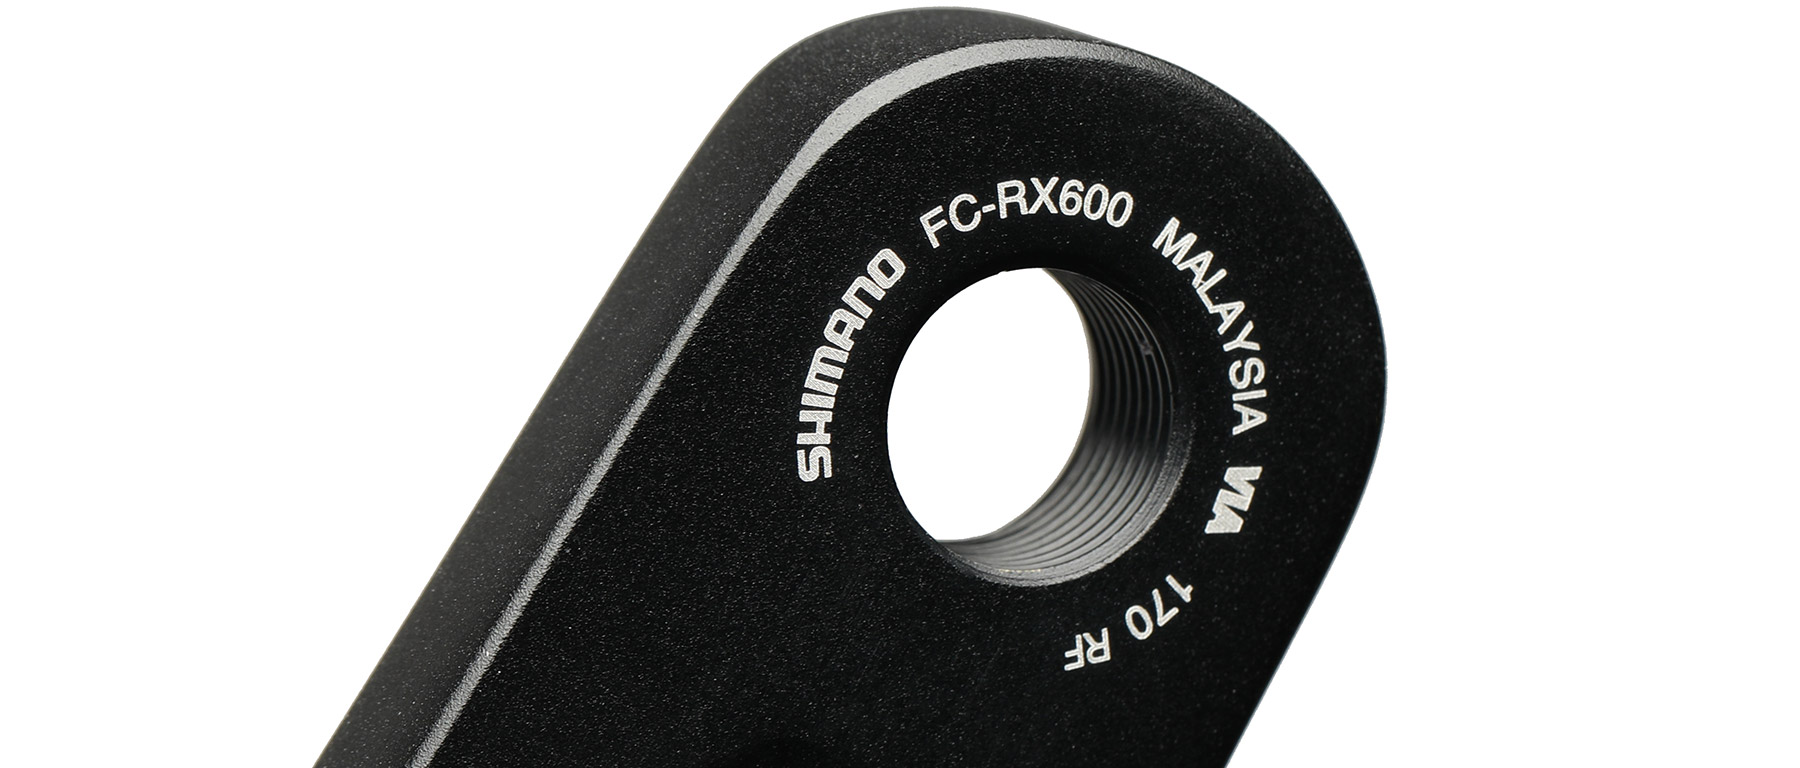 Shimano GRX FC-RX600 1x Crankset